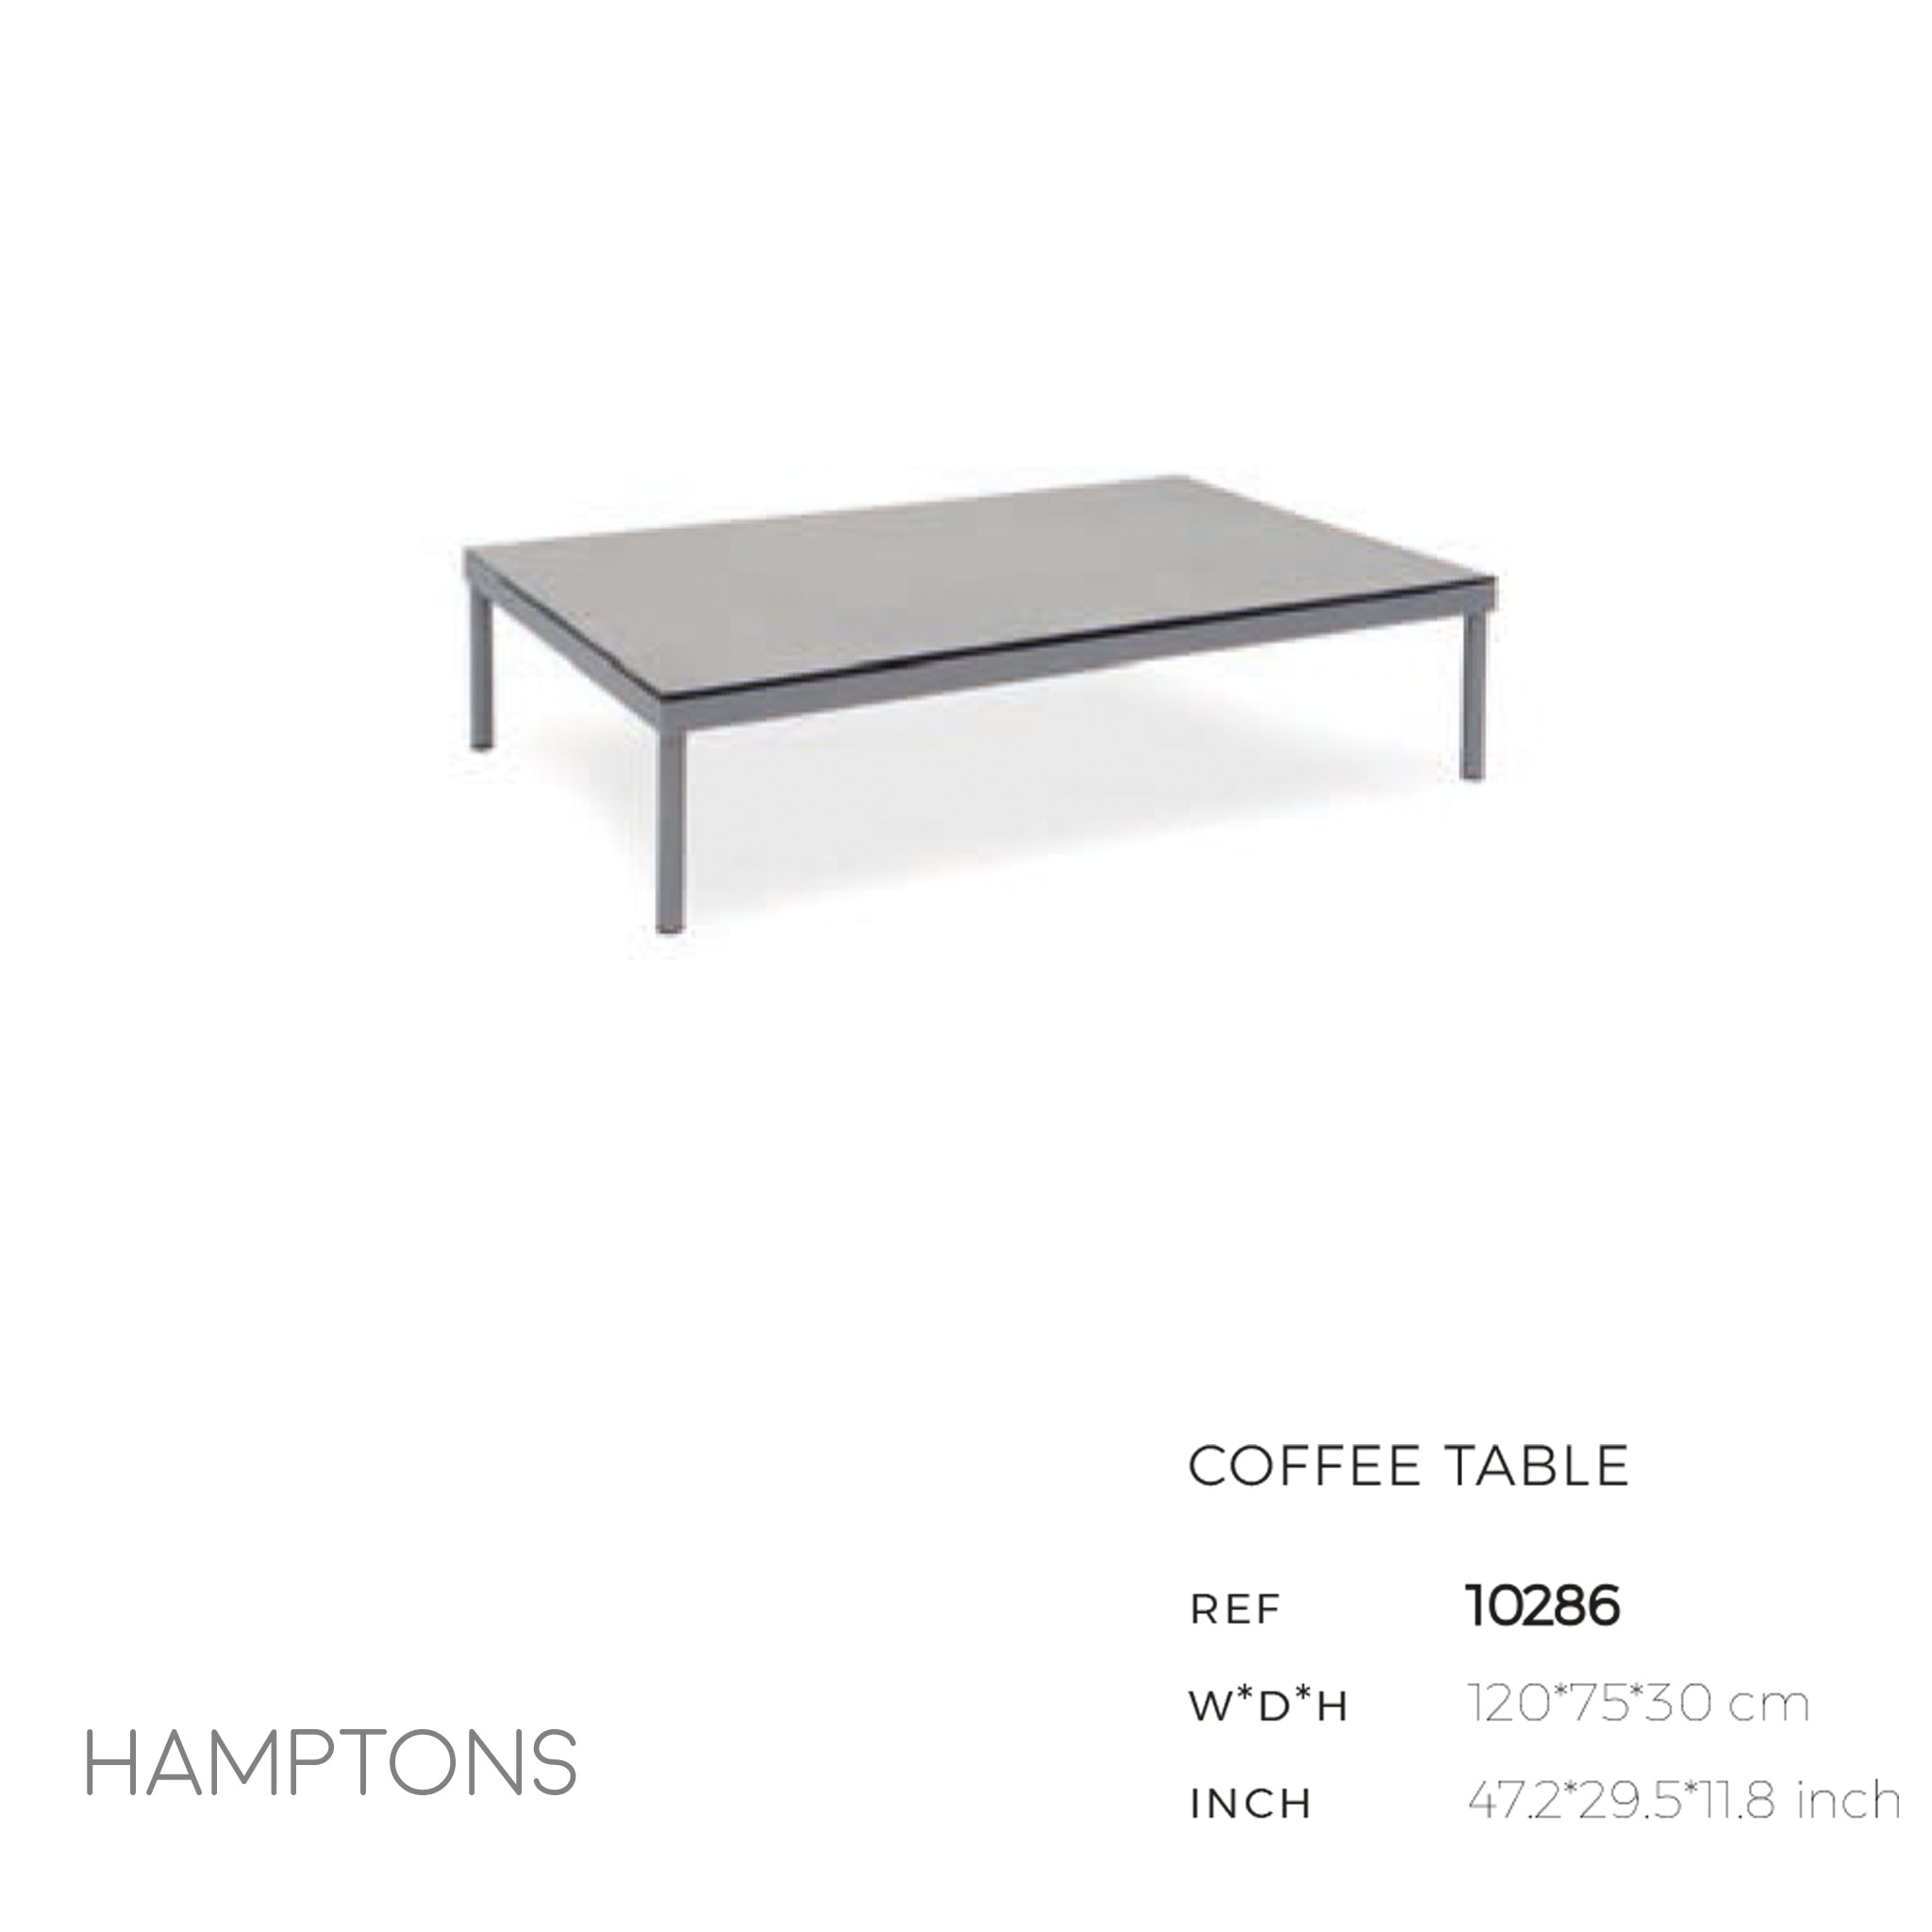 Hamptons Coffee Table